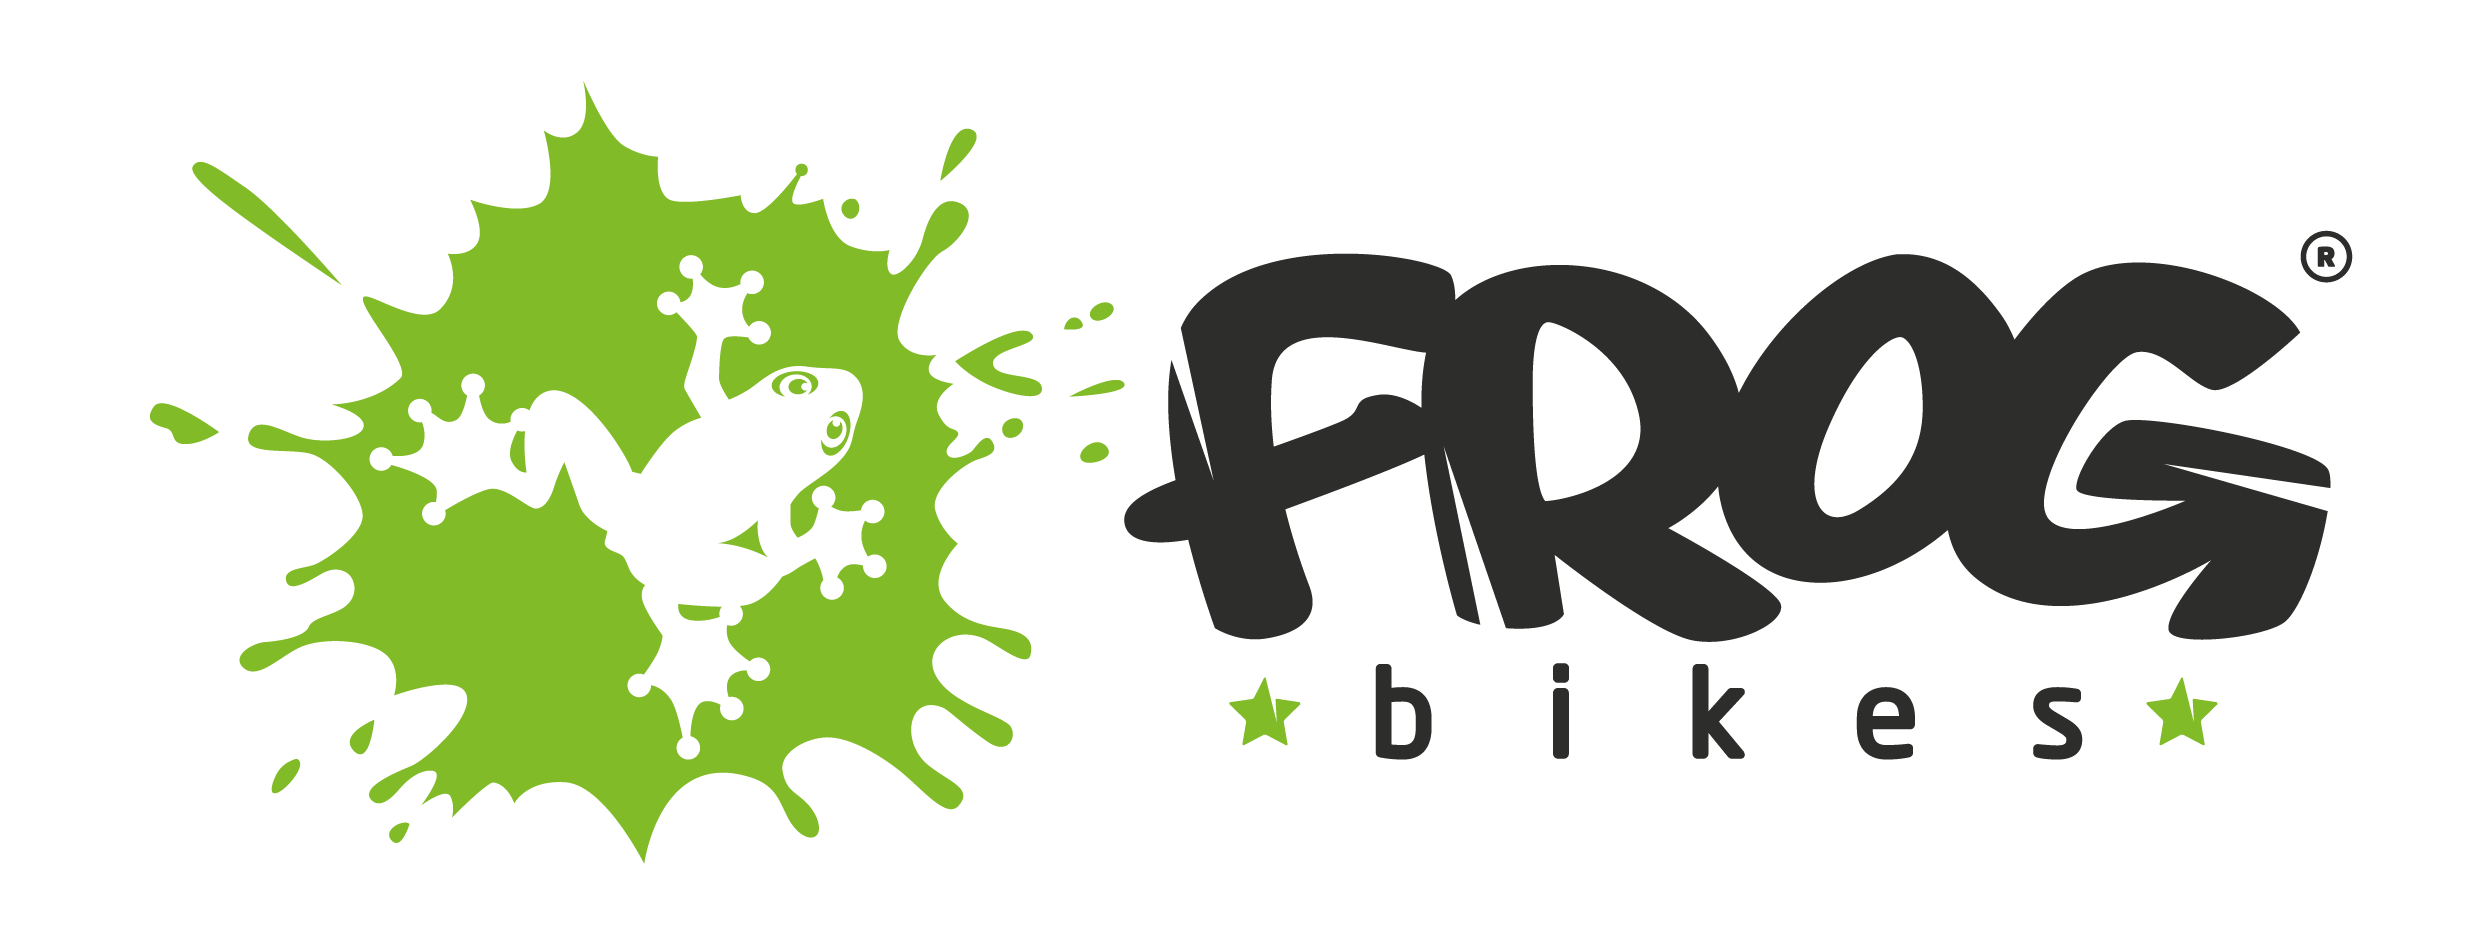 Green Bike Logo - Frog Bike Logos - Frog Bikes